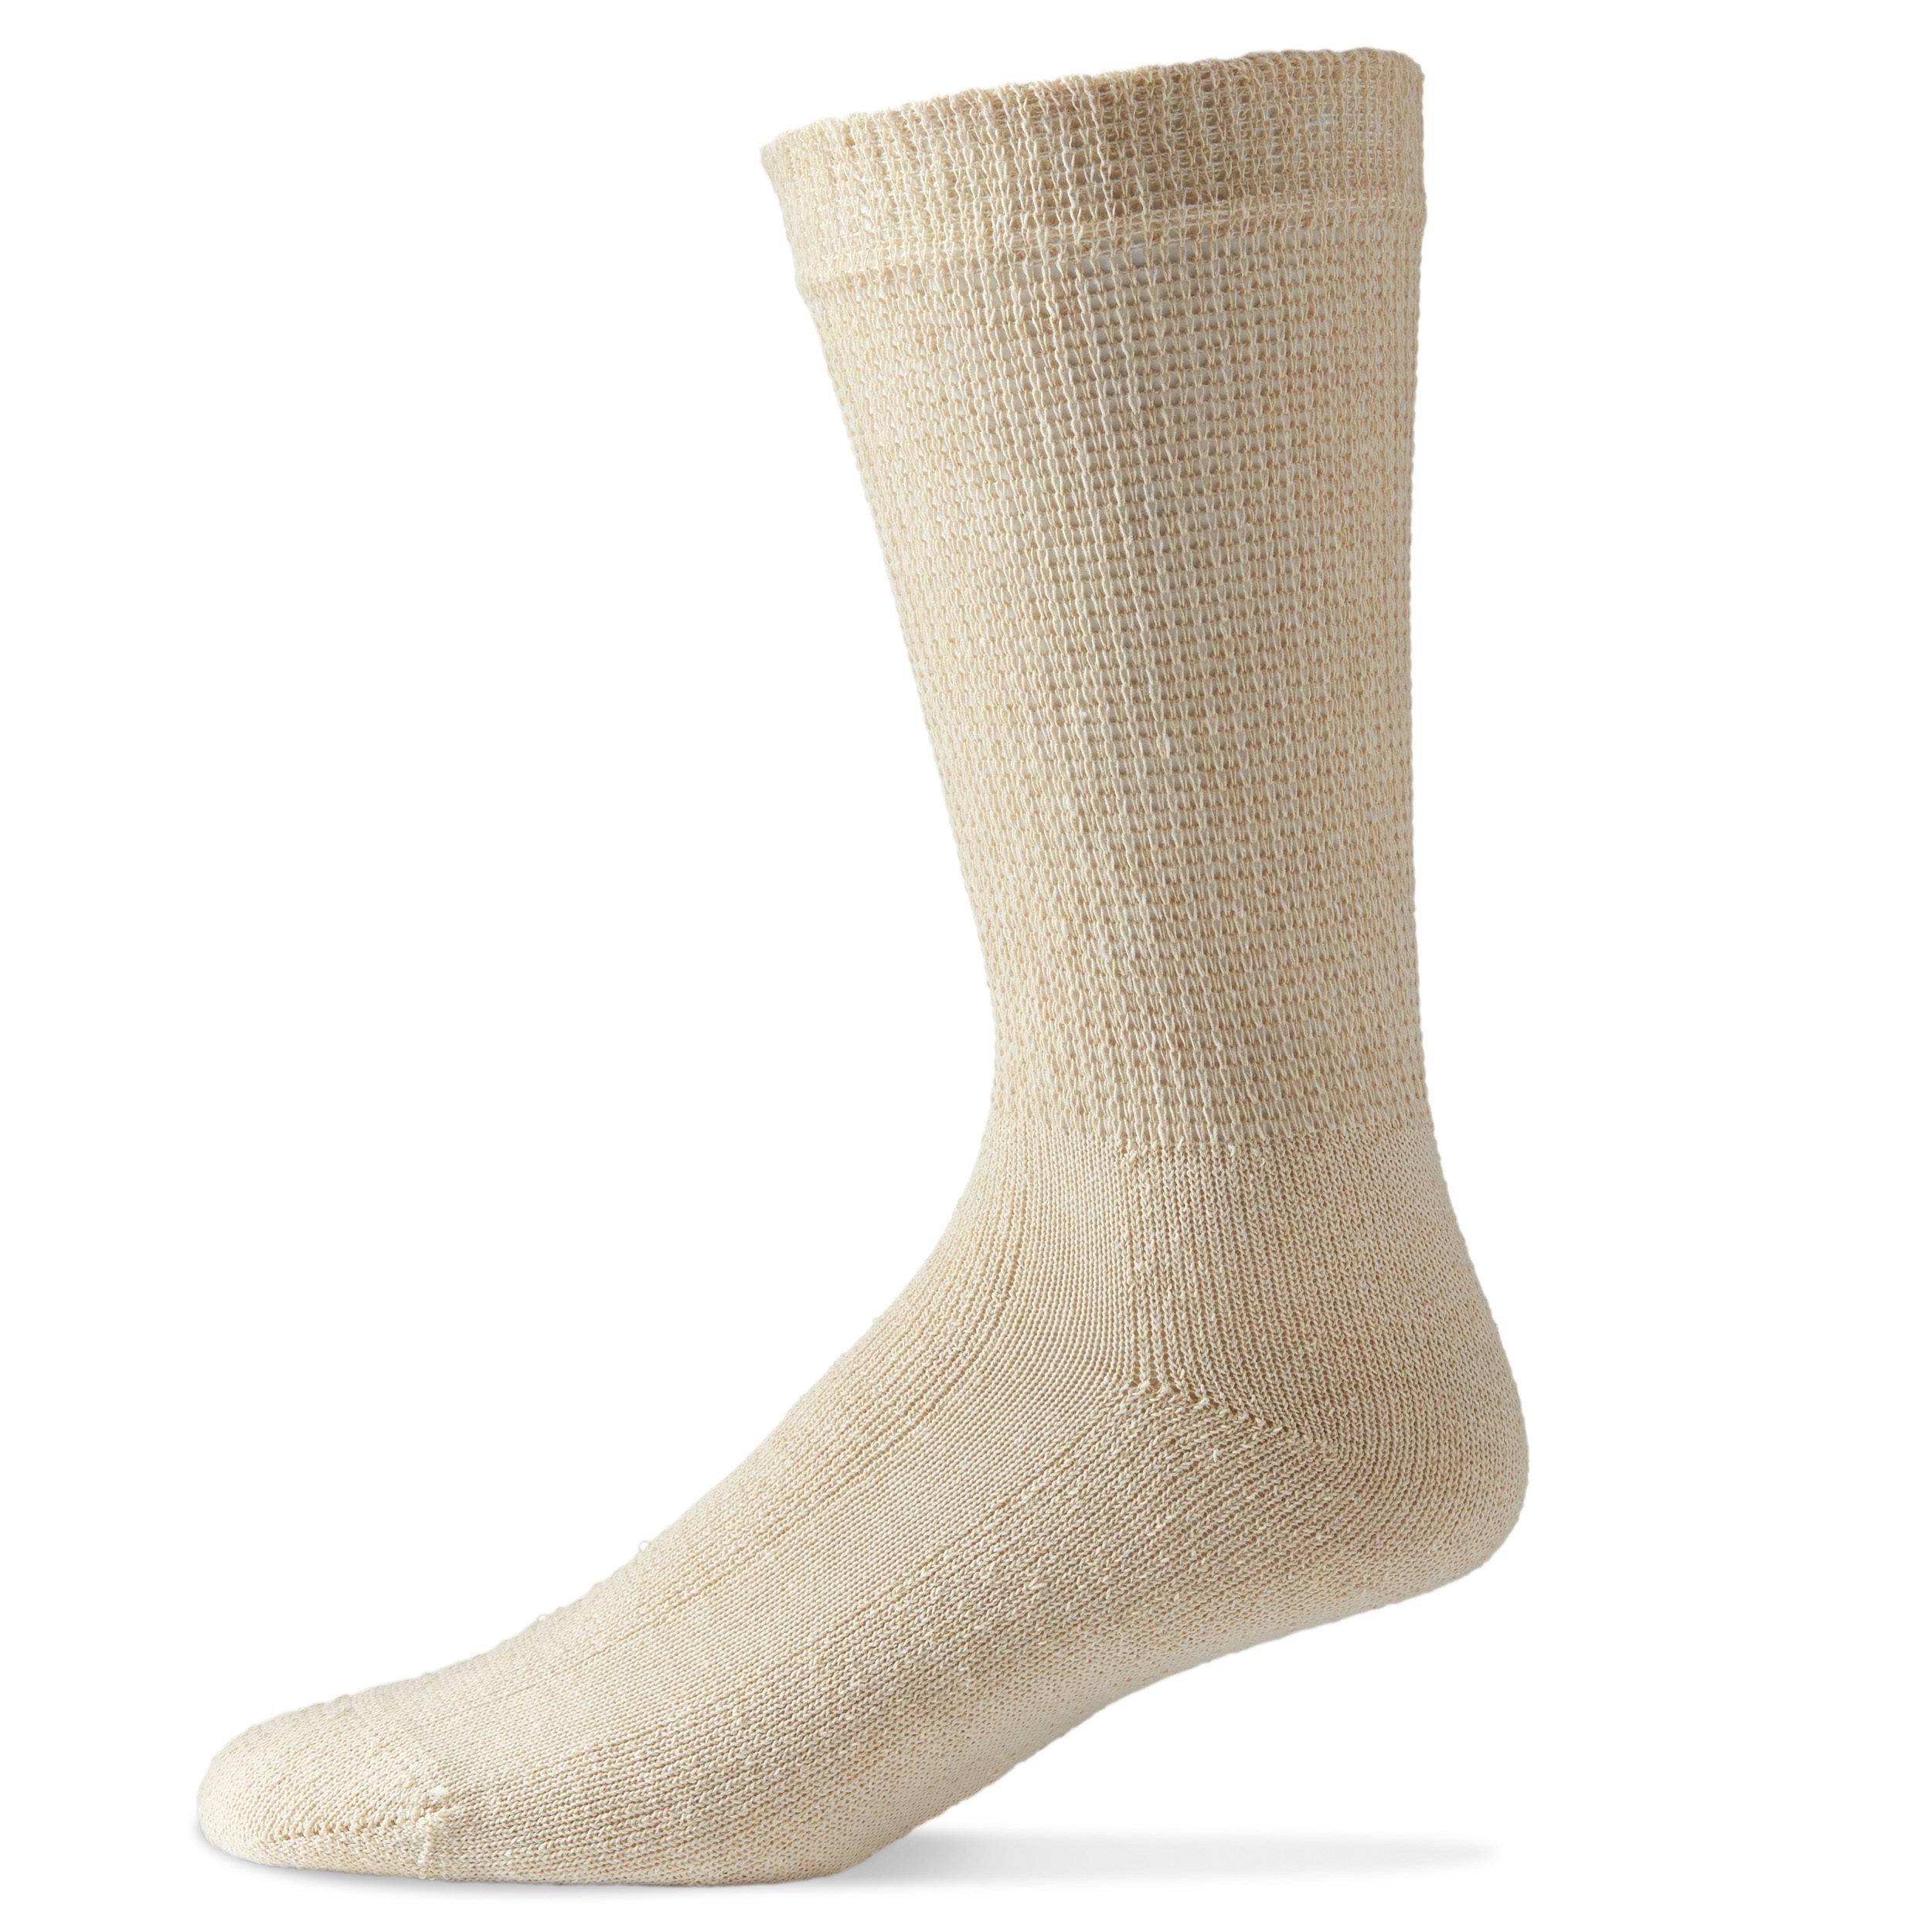 Women's Diabetic Crew Socks 9-11 - Cotton Blend Sole Pleasers Loose To